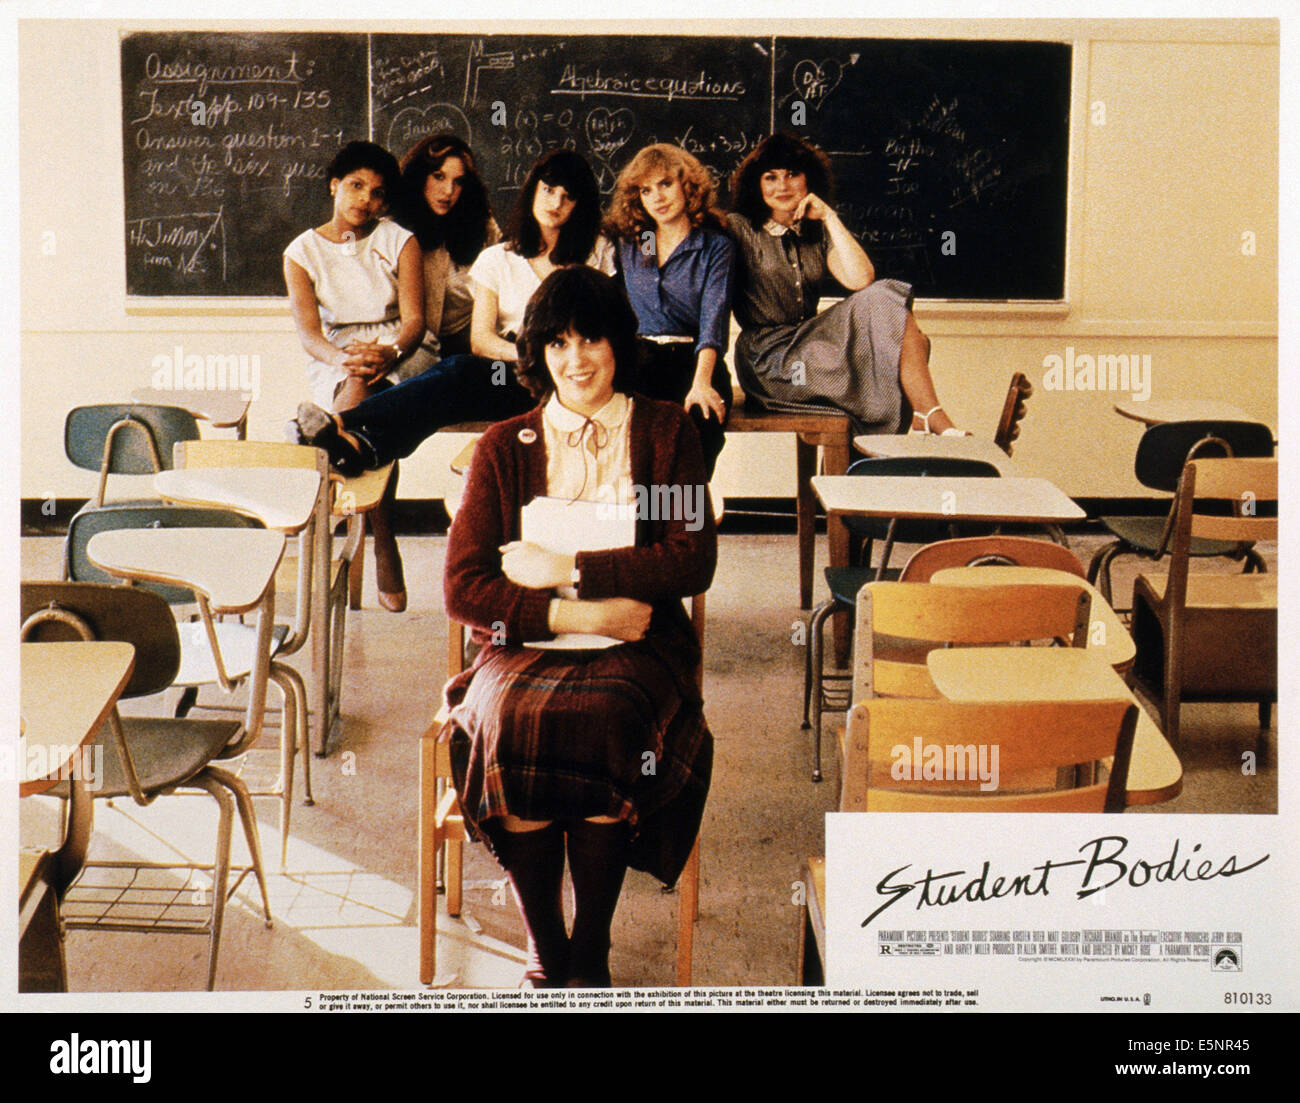 STUDENT BODIES, US lobbycard, Kristen Riter, (front), Angela Bressler (back, second right),  1981, ©Paramount/Courtesy Everett Stock Photo